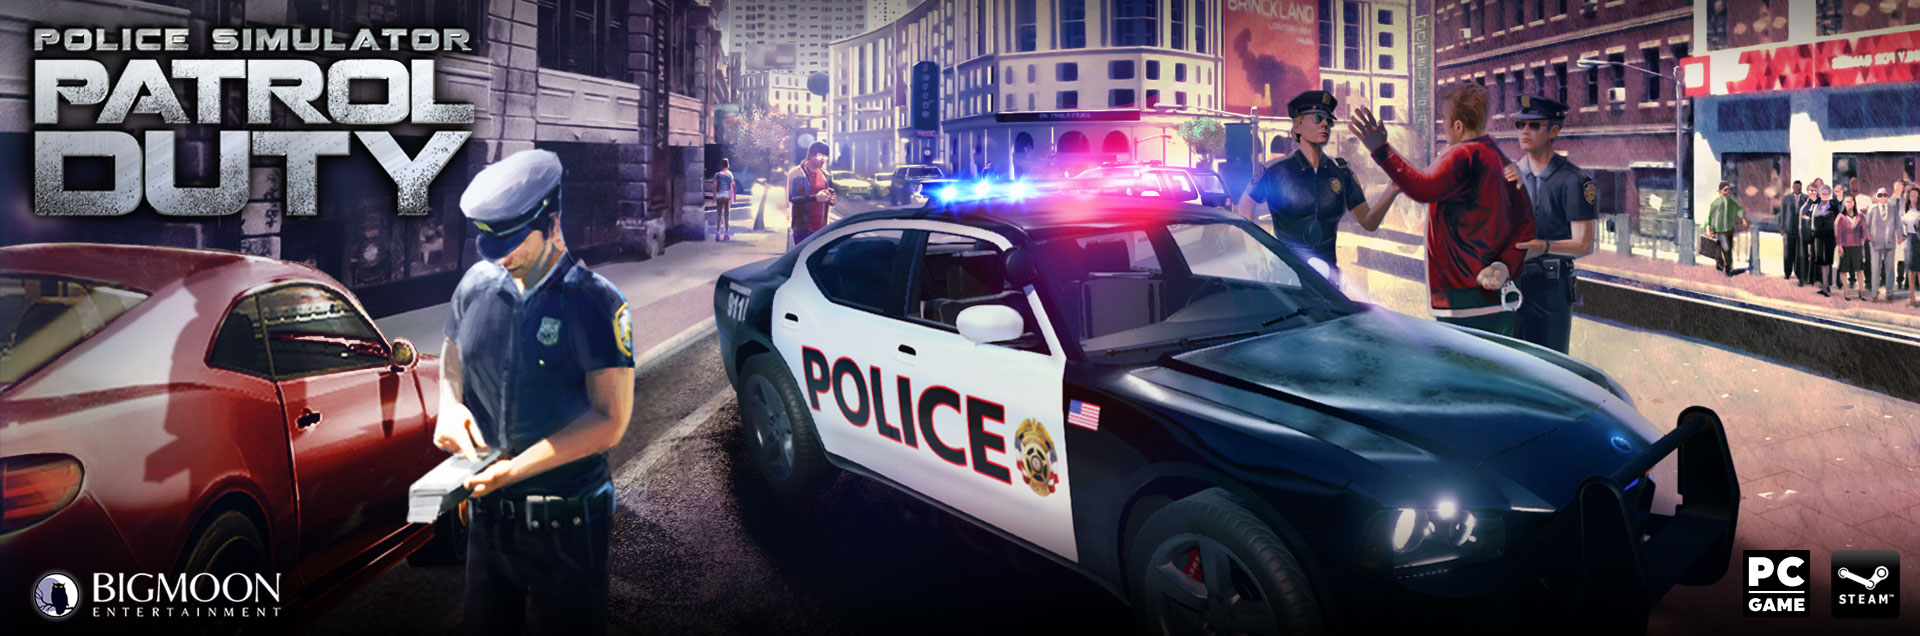 Police Simulator Patrol Duty PC Game - Free Download Full Version